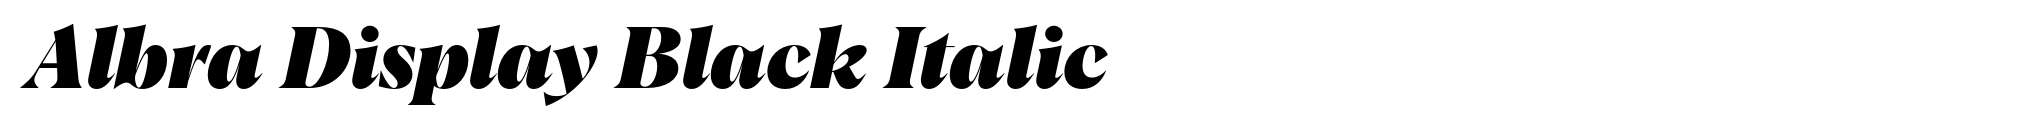 Albra Display Black Italic image